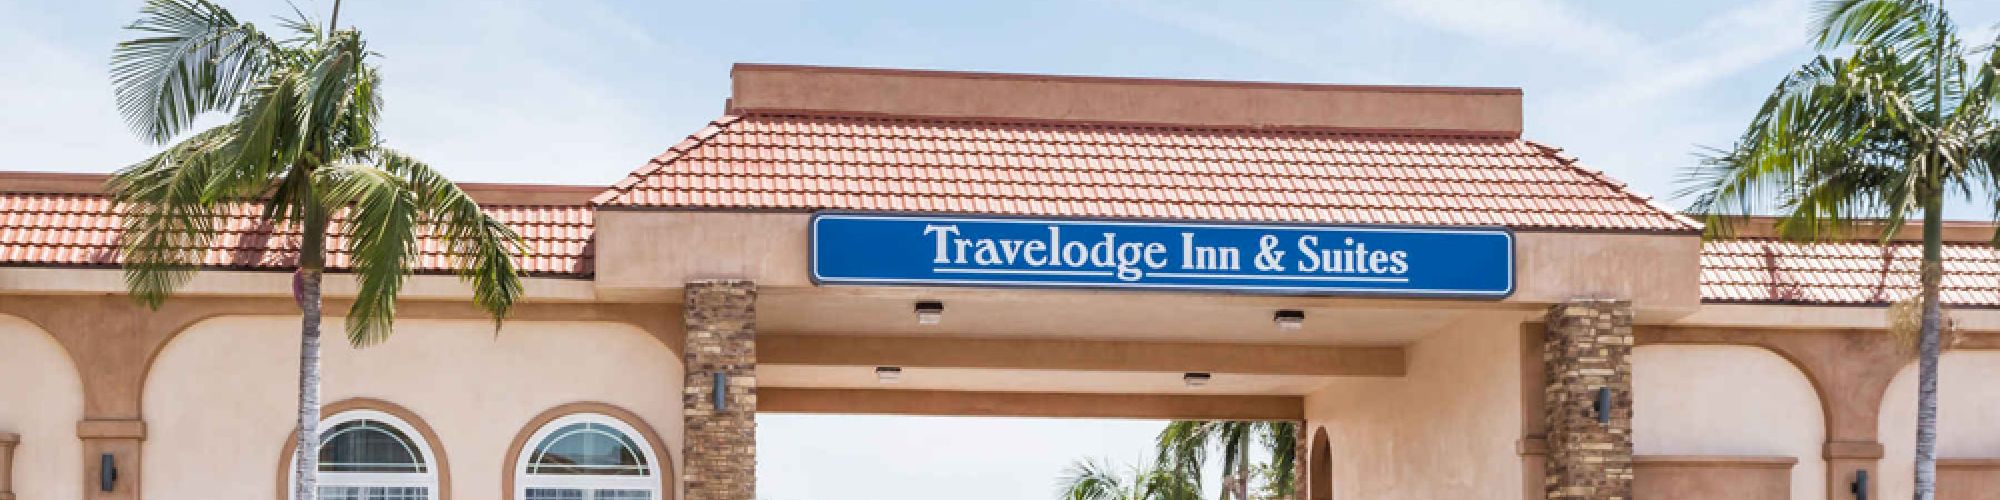 Travelodge Inn & Suites Bell Los Angeles